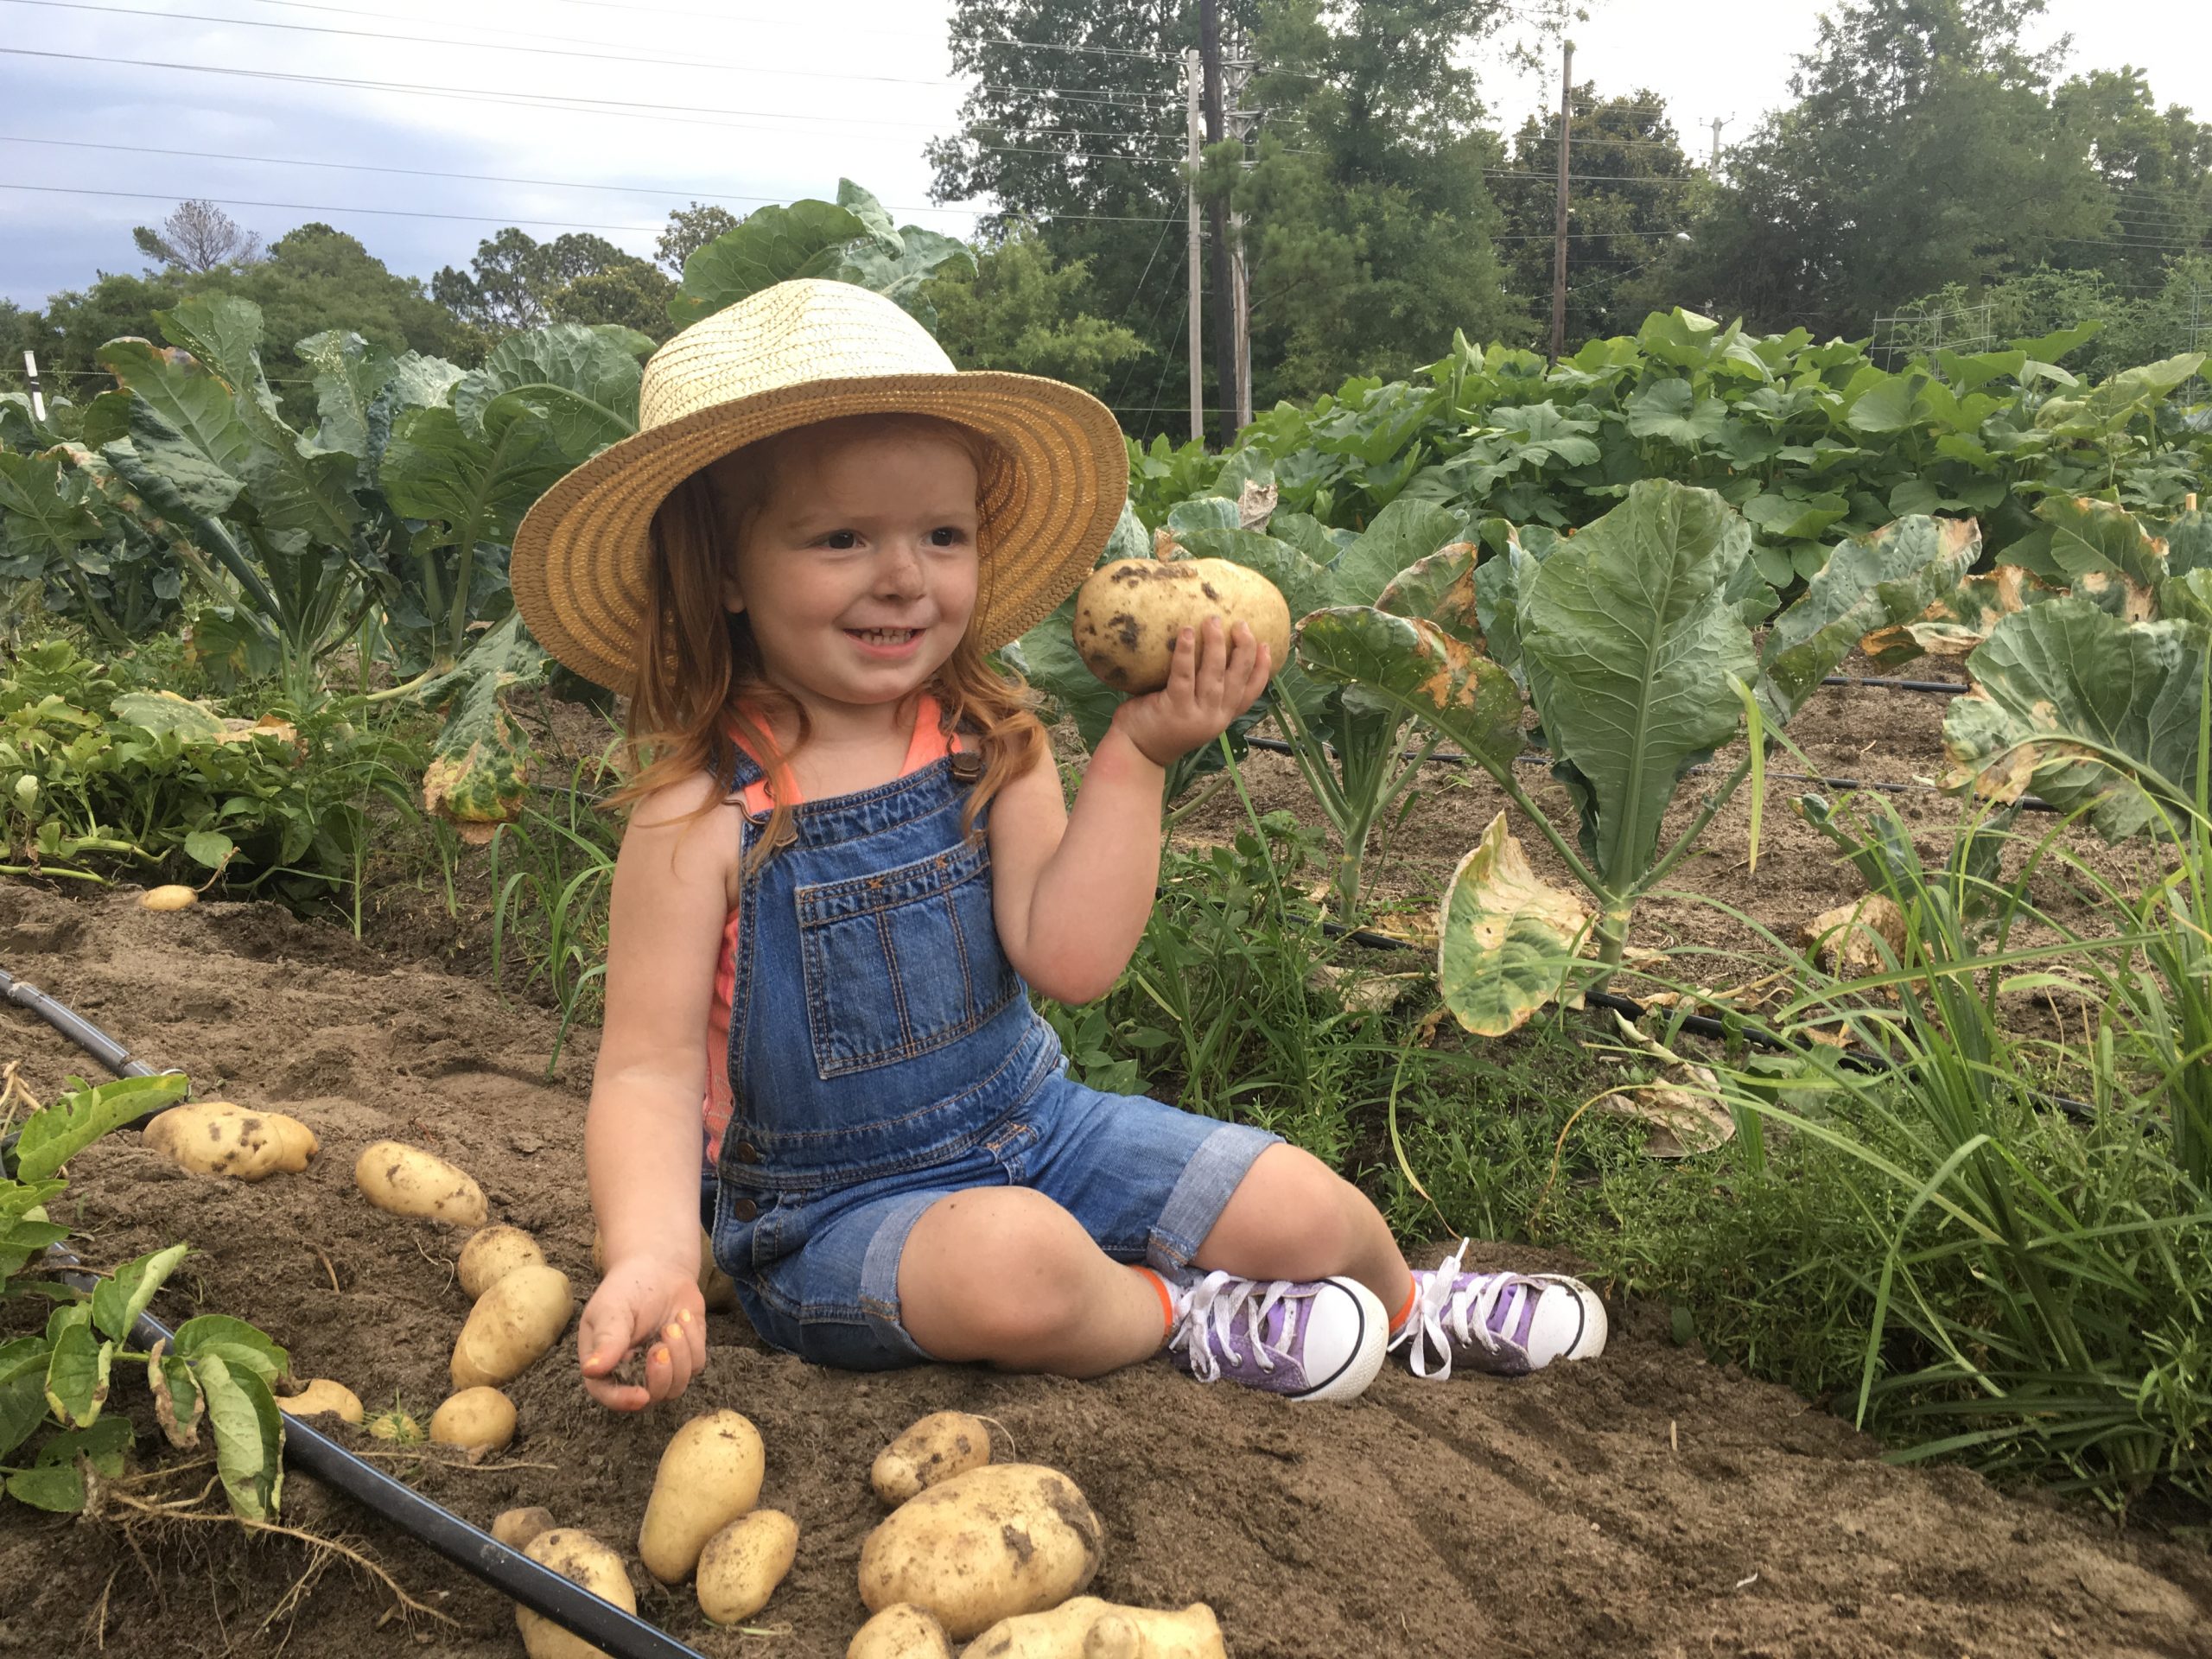 Little girl with potatoes